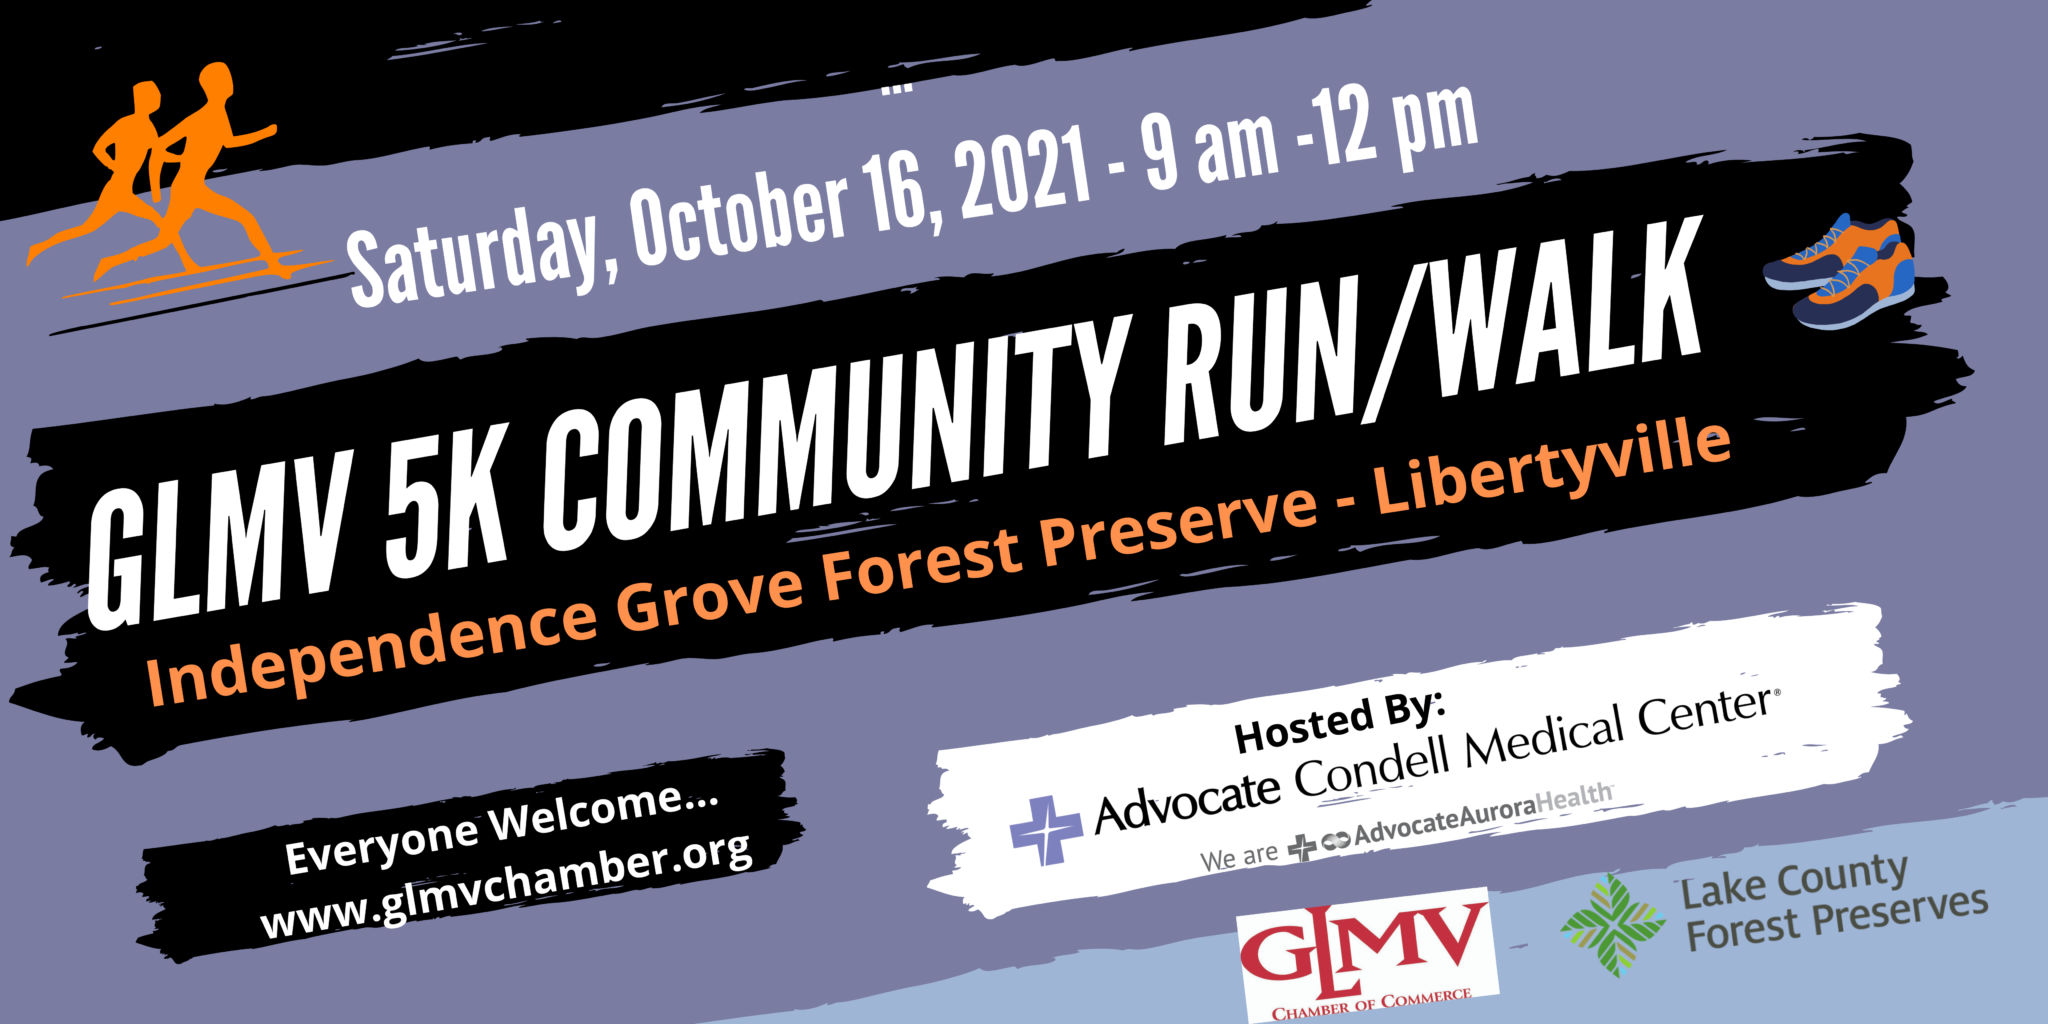 GLMV 5K Community Fun Run & Walk logo on RaceRaves